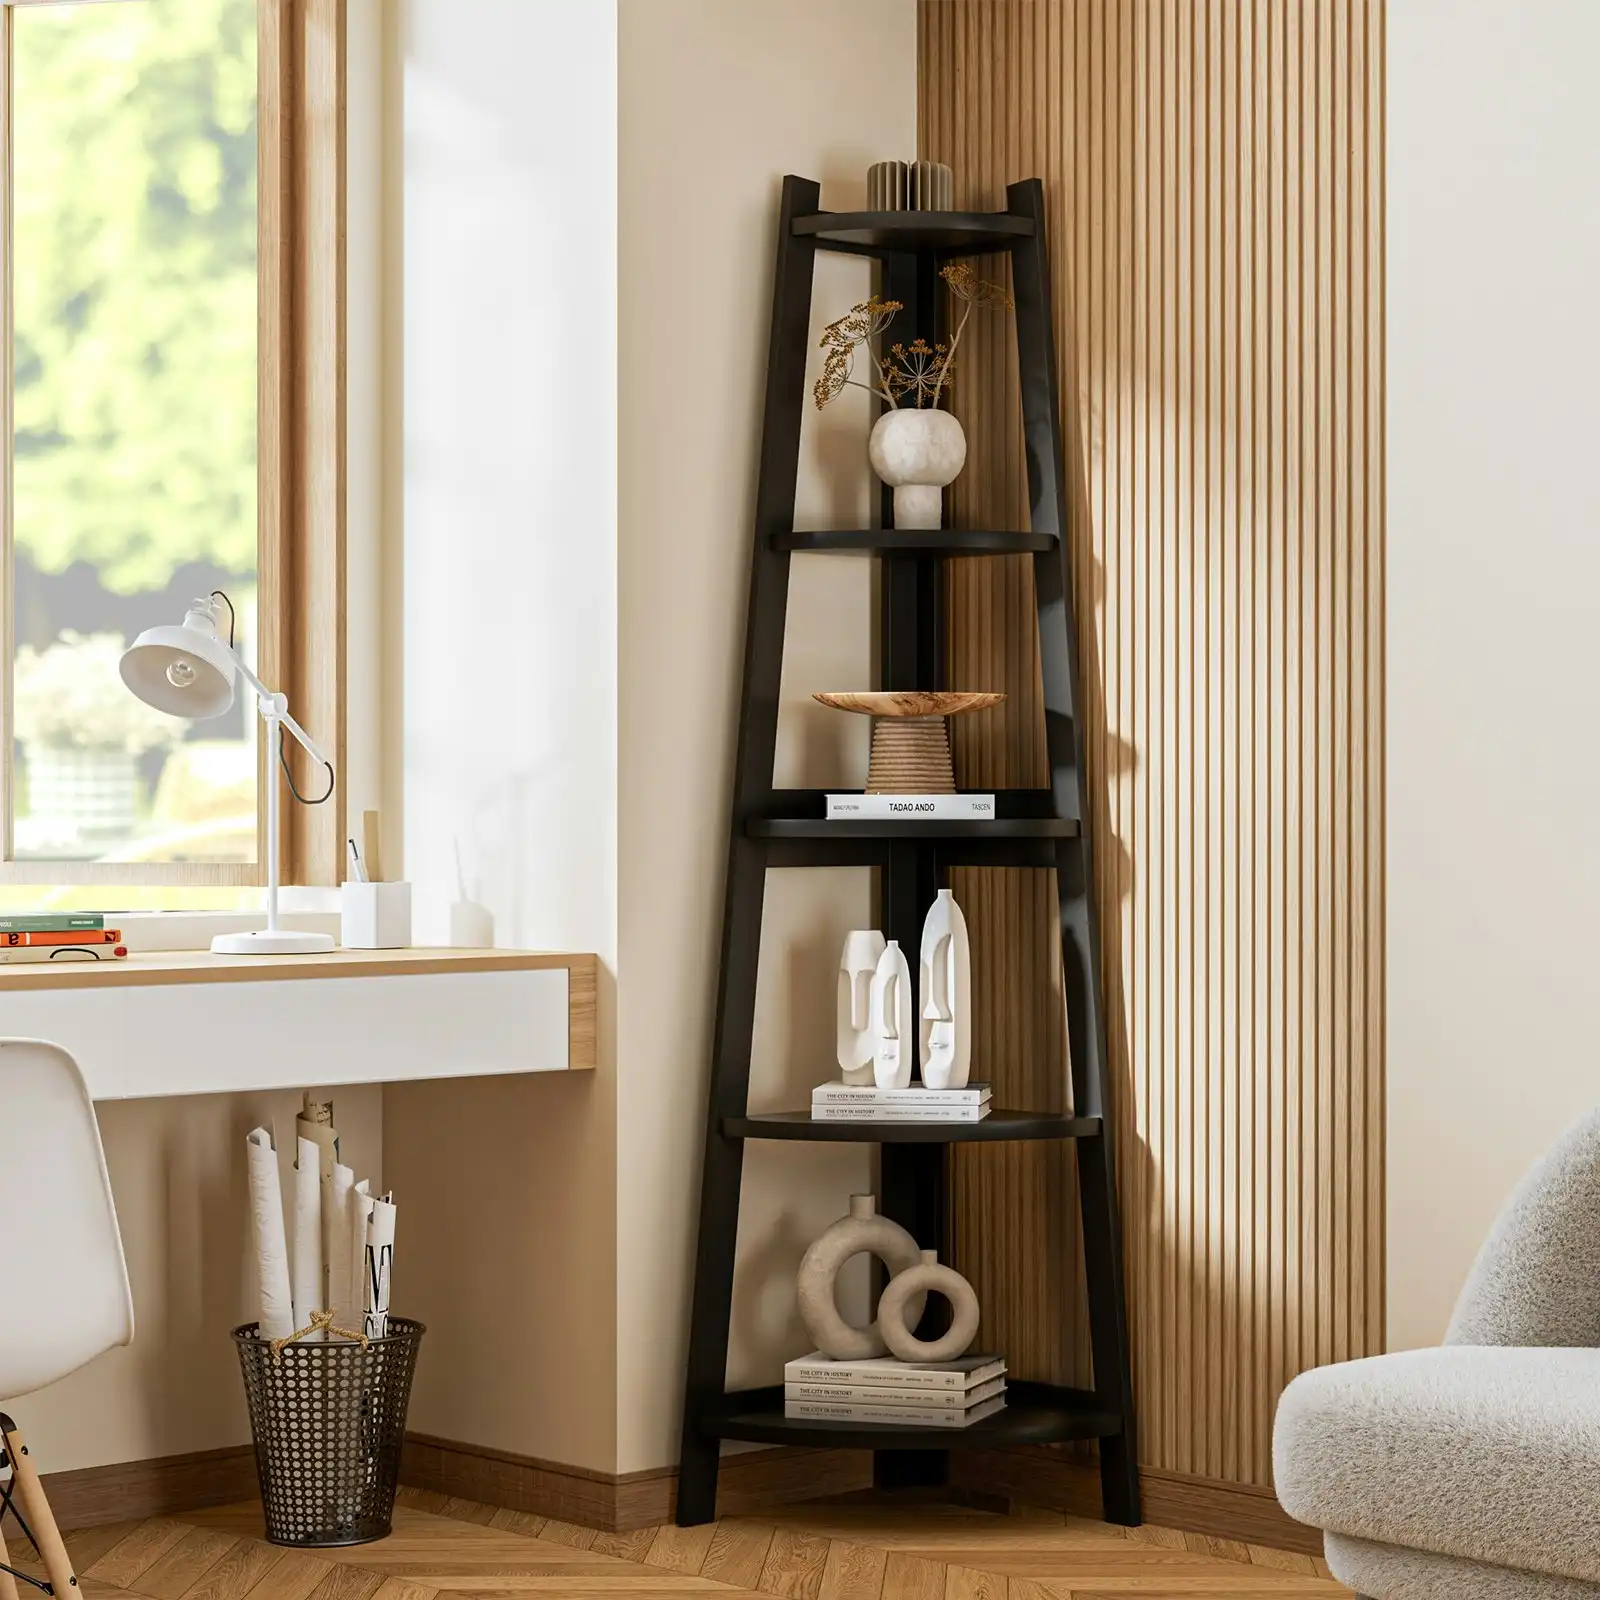 Oikiture Corner Ladder Shelf 5 Tier Home Storage Display Stand Bookshelf Black